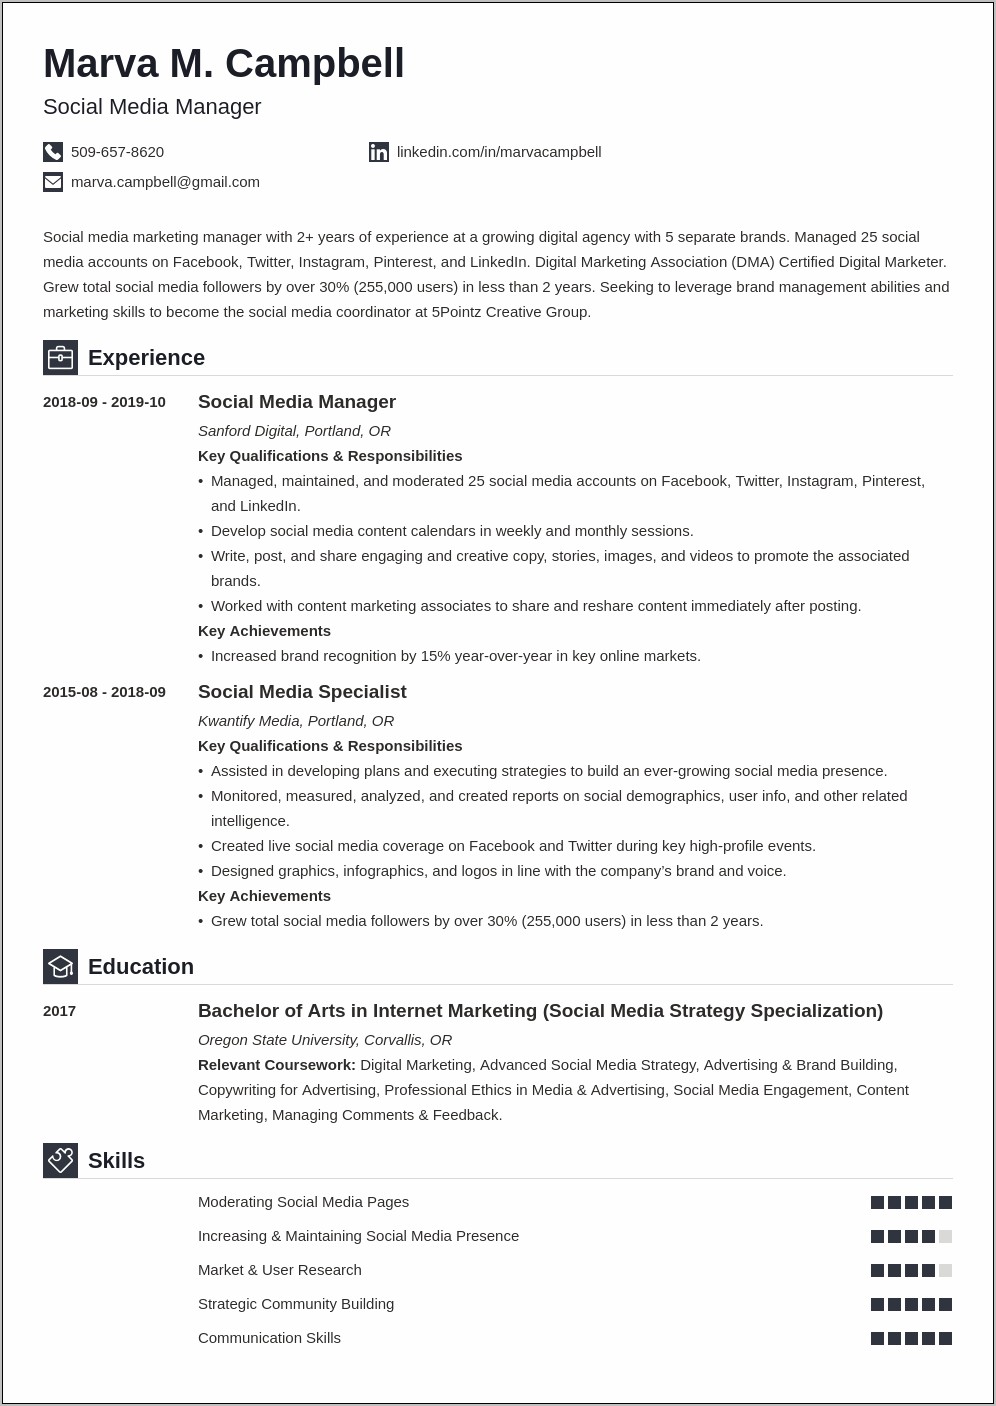 Resume Jobs Description Examples Communication Skills